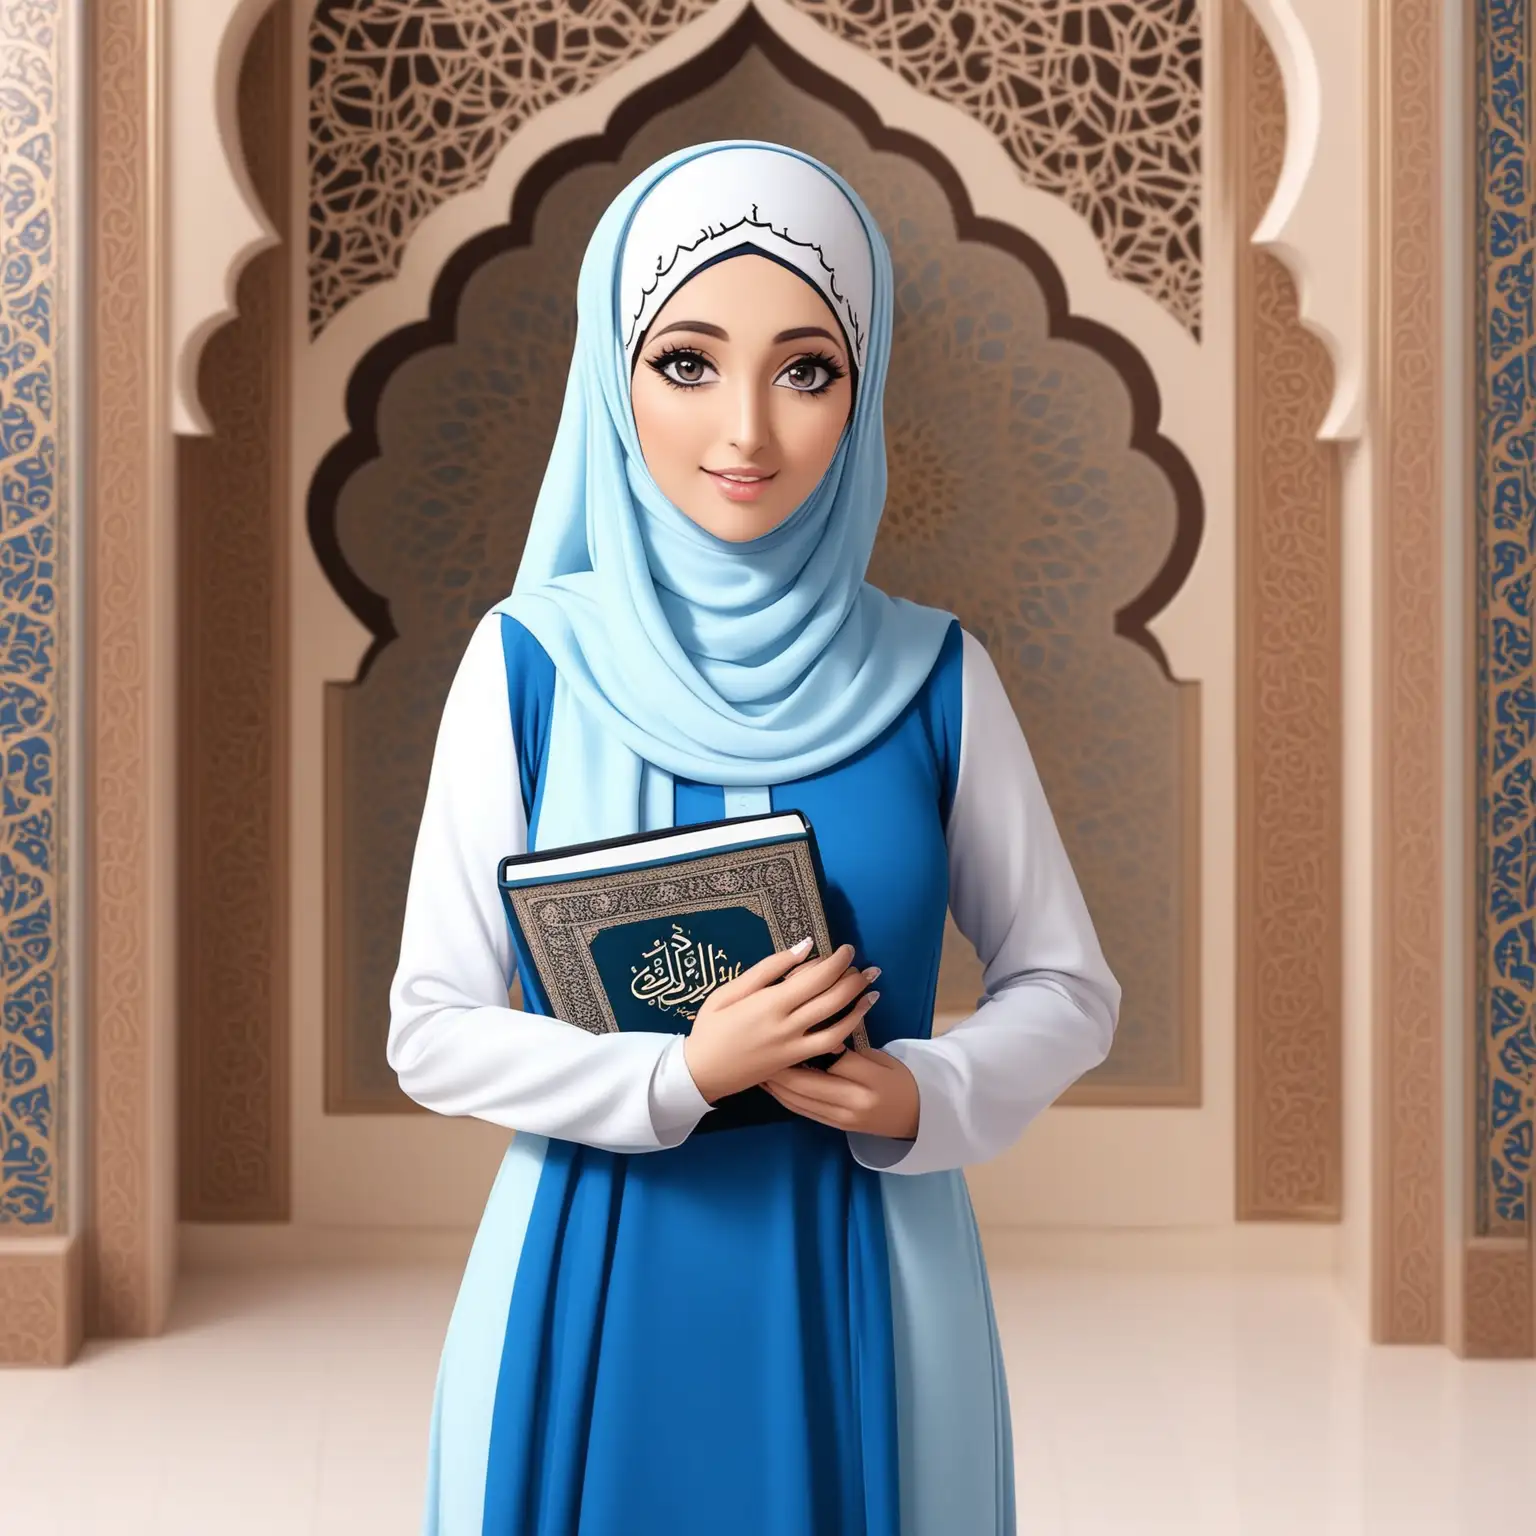 female quran teacher wearing white and blue dress